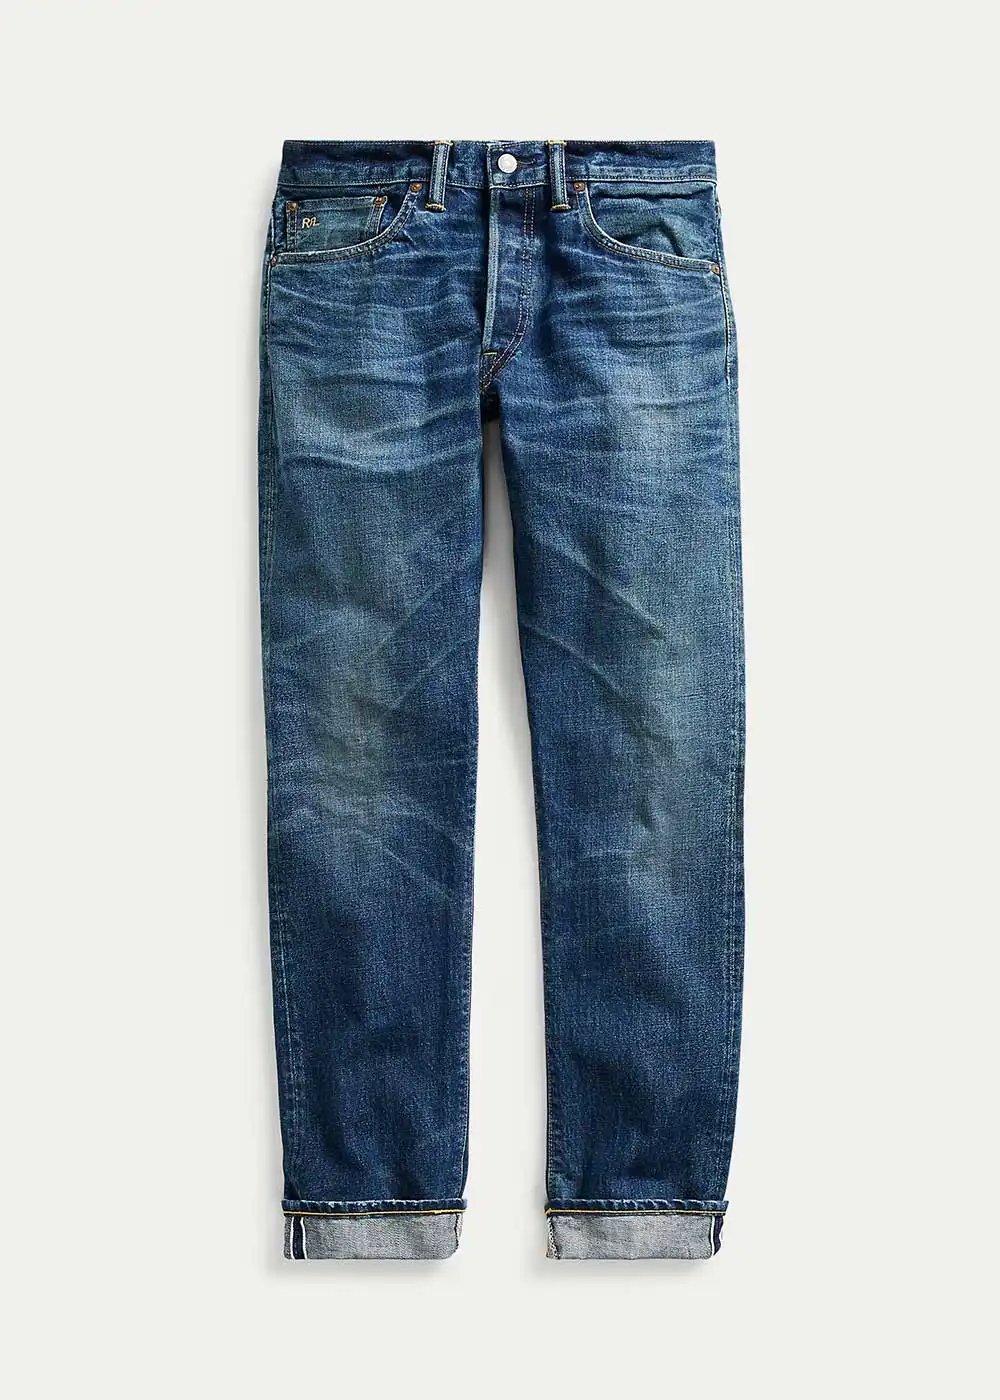 Double RL Jeans & Denim